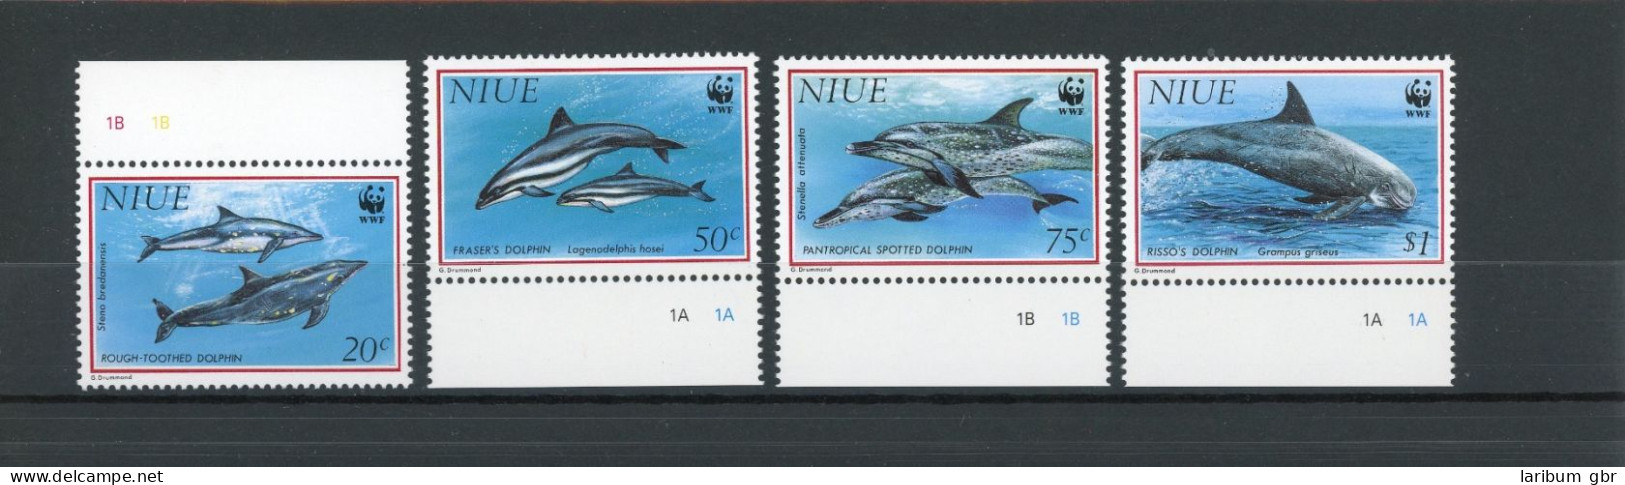 Niue 822-25 Postfrisch Fische #IN026 - Niue